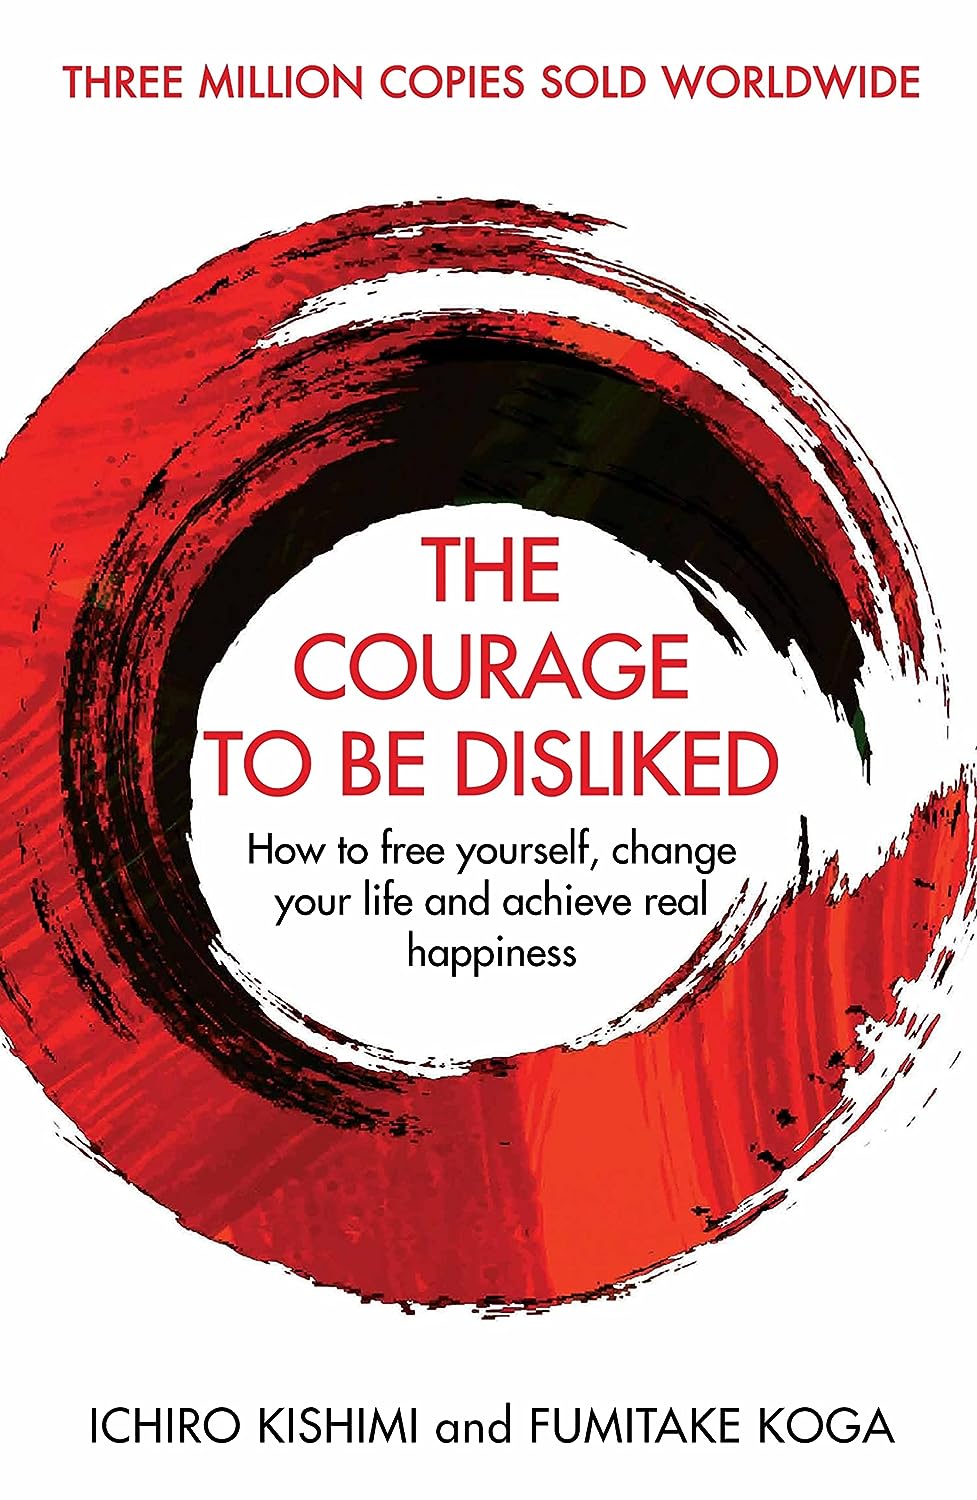 Week #26 – Kishimi & Koga – The Courage to be Disliked